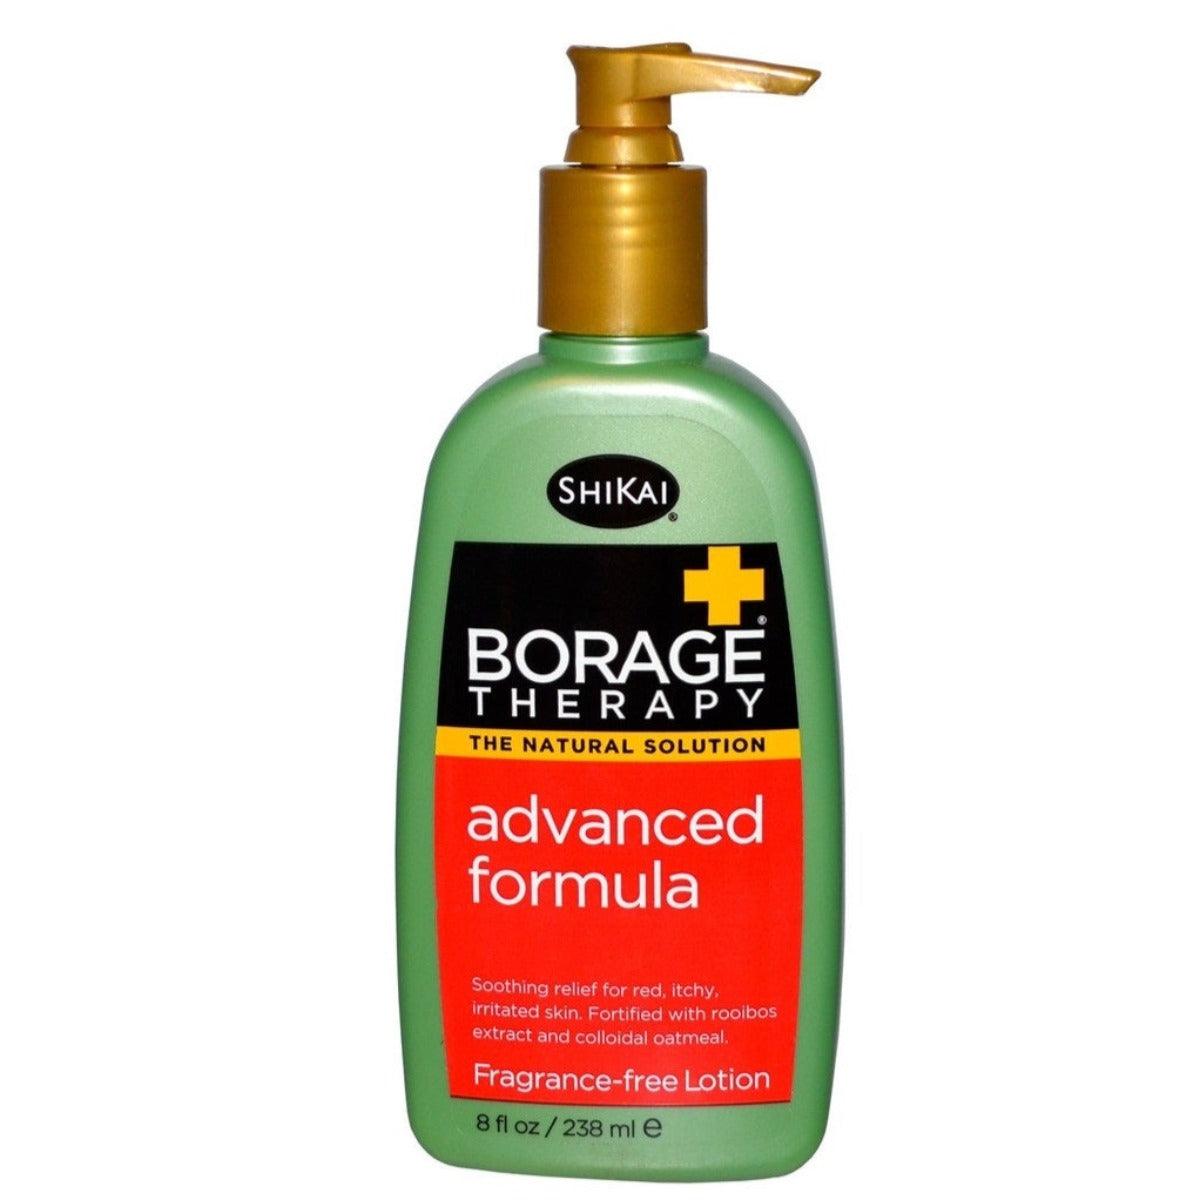 Shikai, Borage Therapy, Advanced Formula Lotion, Fragrance-Free, 238 ML Body Moisturizer at Village Vitamin Store